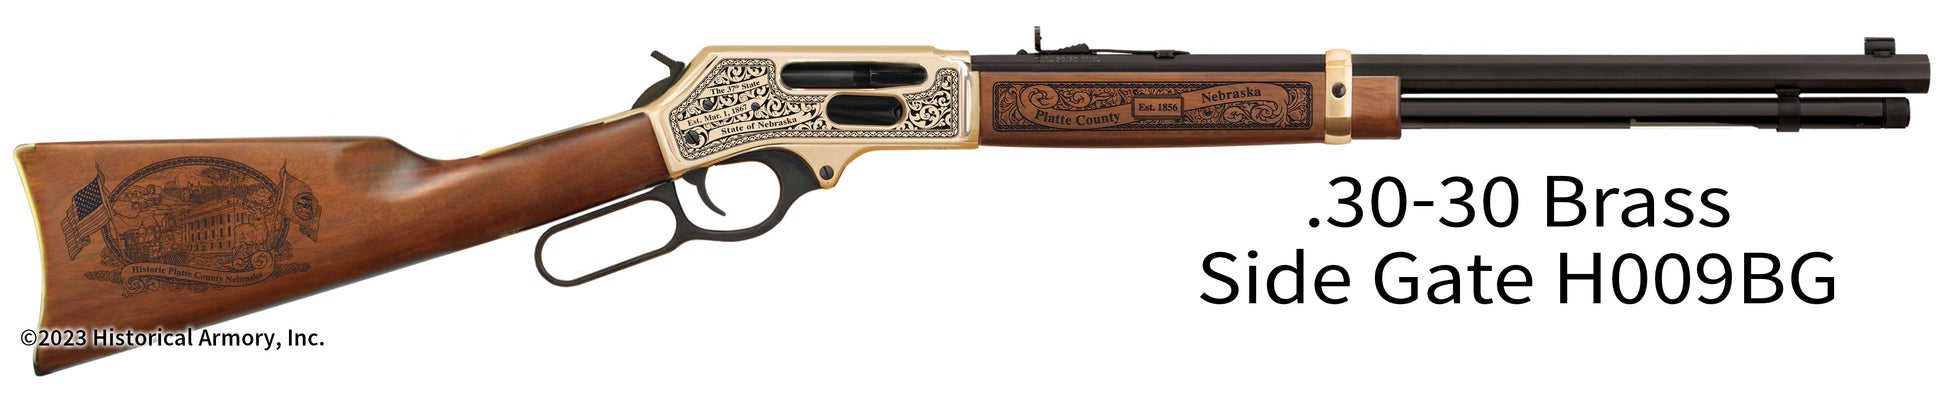 Platte County Nebraska Engraved Henry .30-30 Brass Side Gate Rifle